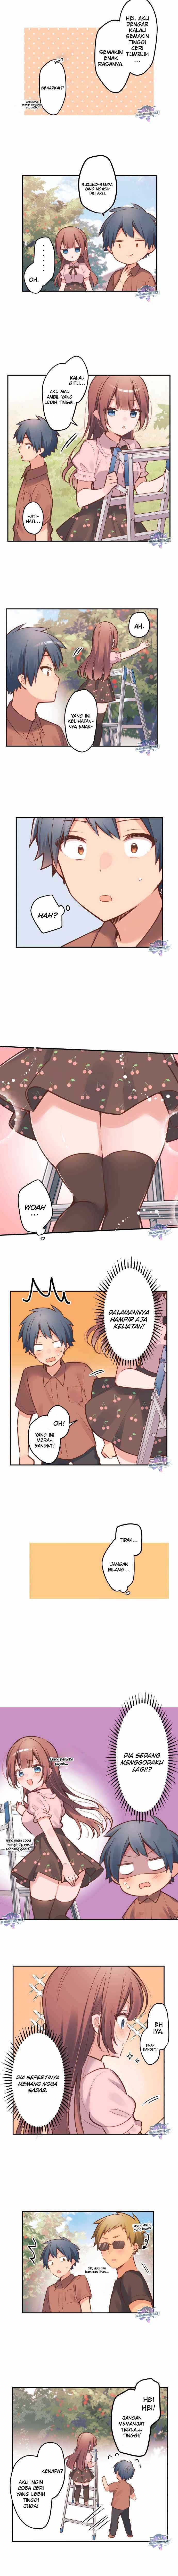 Waka-chan Is Flirty Again Chapter 07